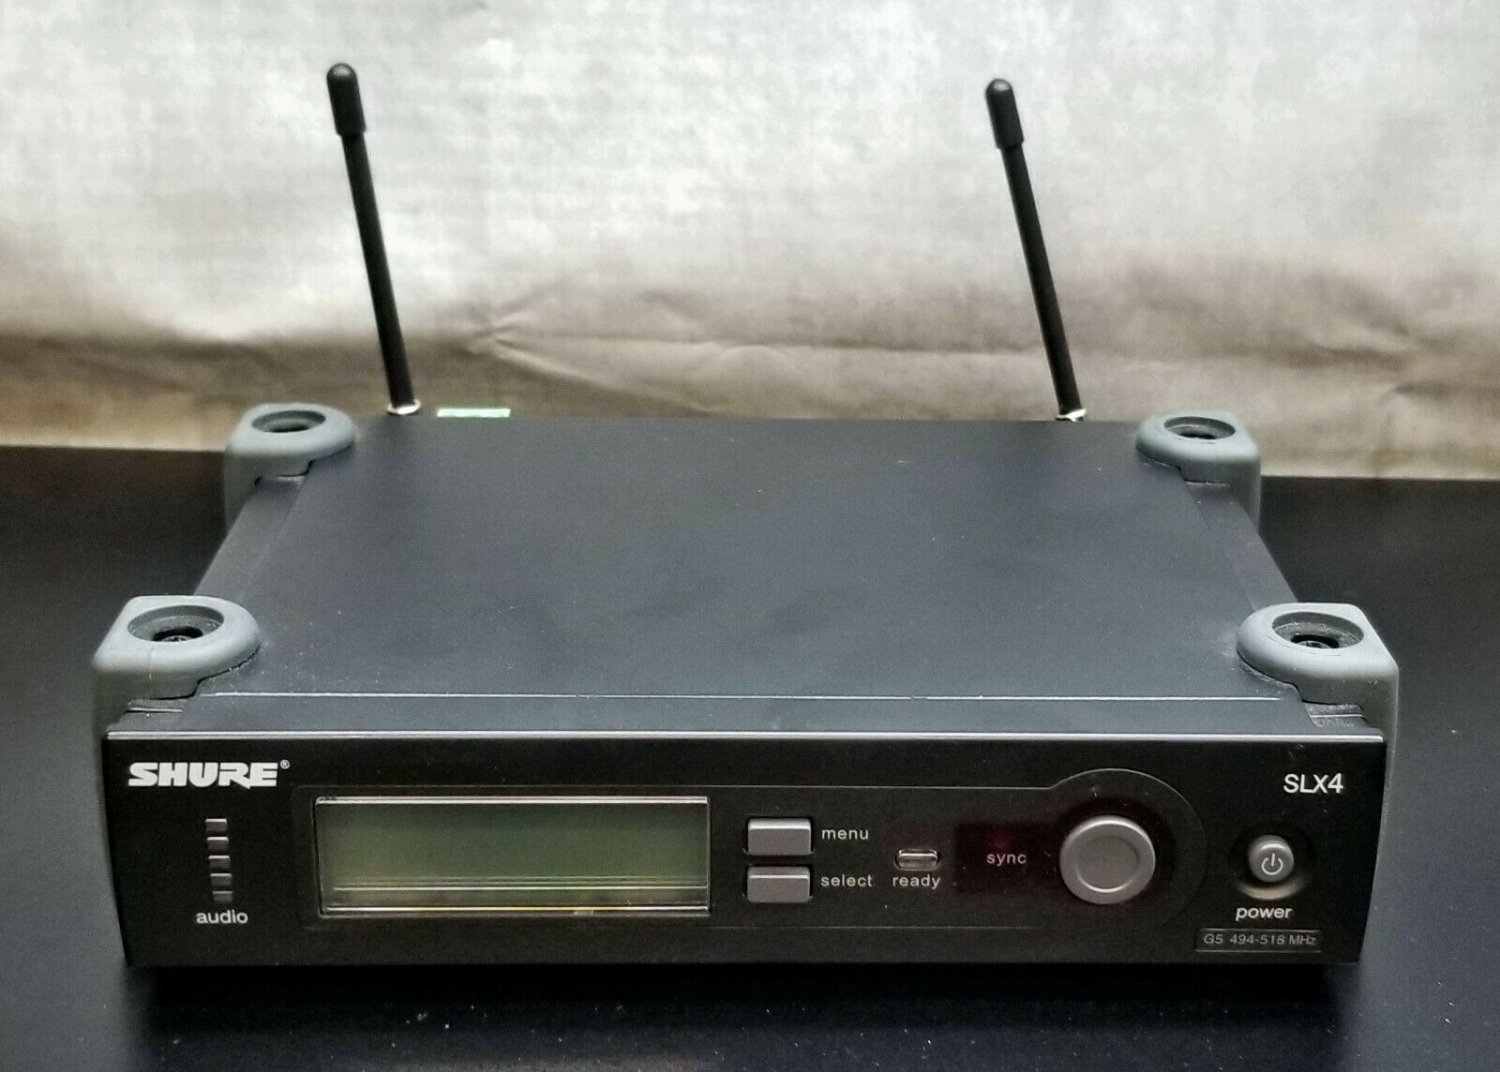 shure-slx4-wireless-receiver-slx4l-h5-518-542-mhz-no-ac-adapter